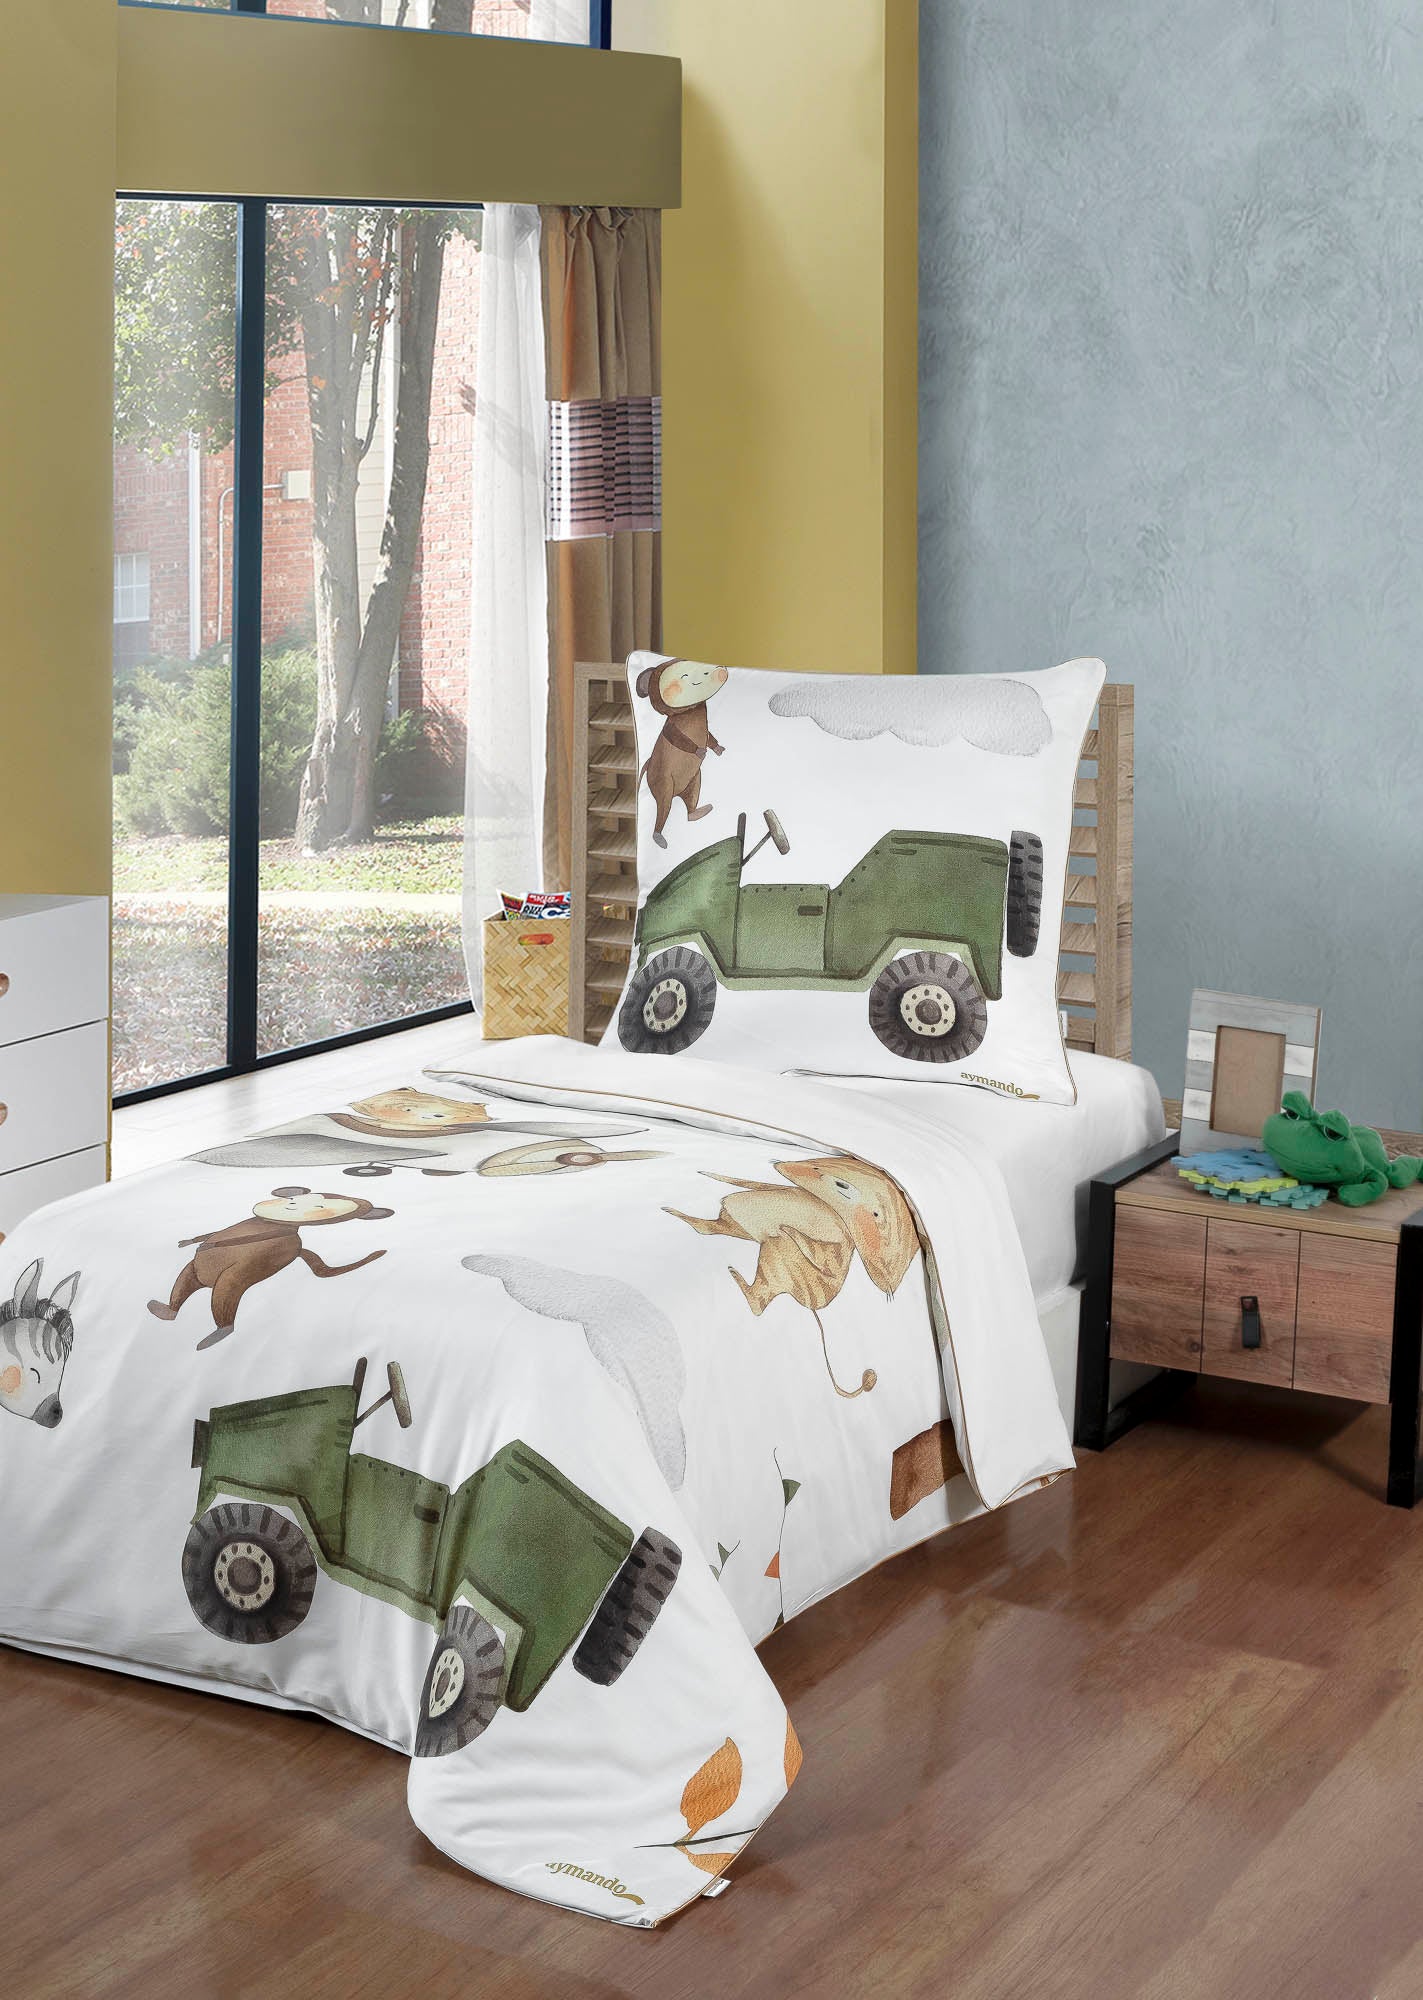 Kid's Bedding Safari